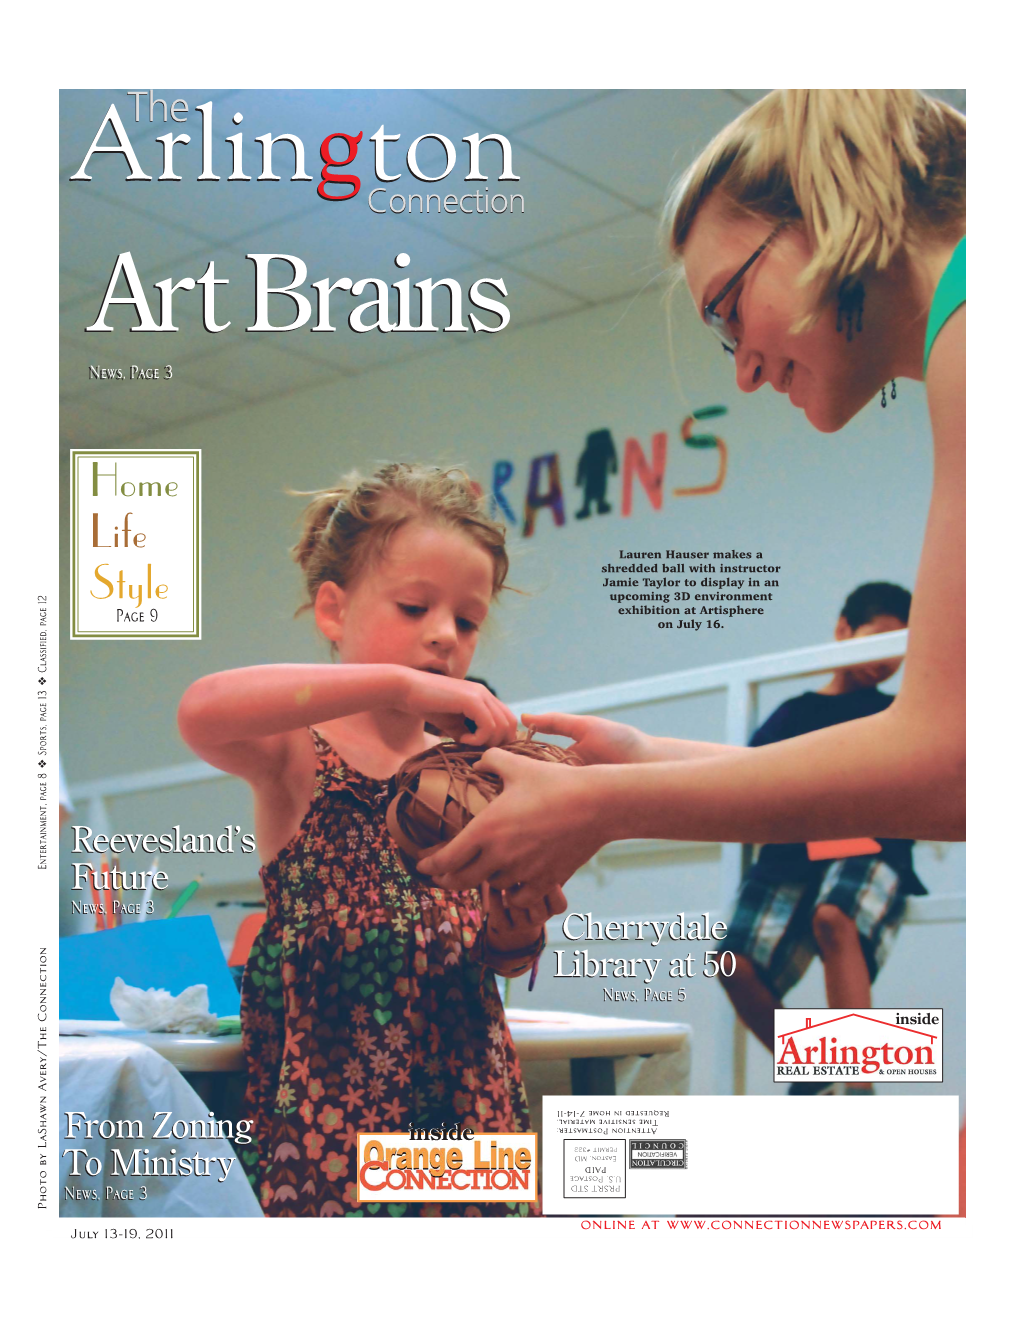 Arlingtonarlinthe Gton Connection Artart Brainsbrains News,News, Pagepage 33